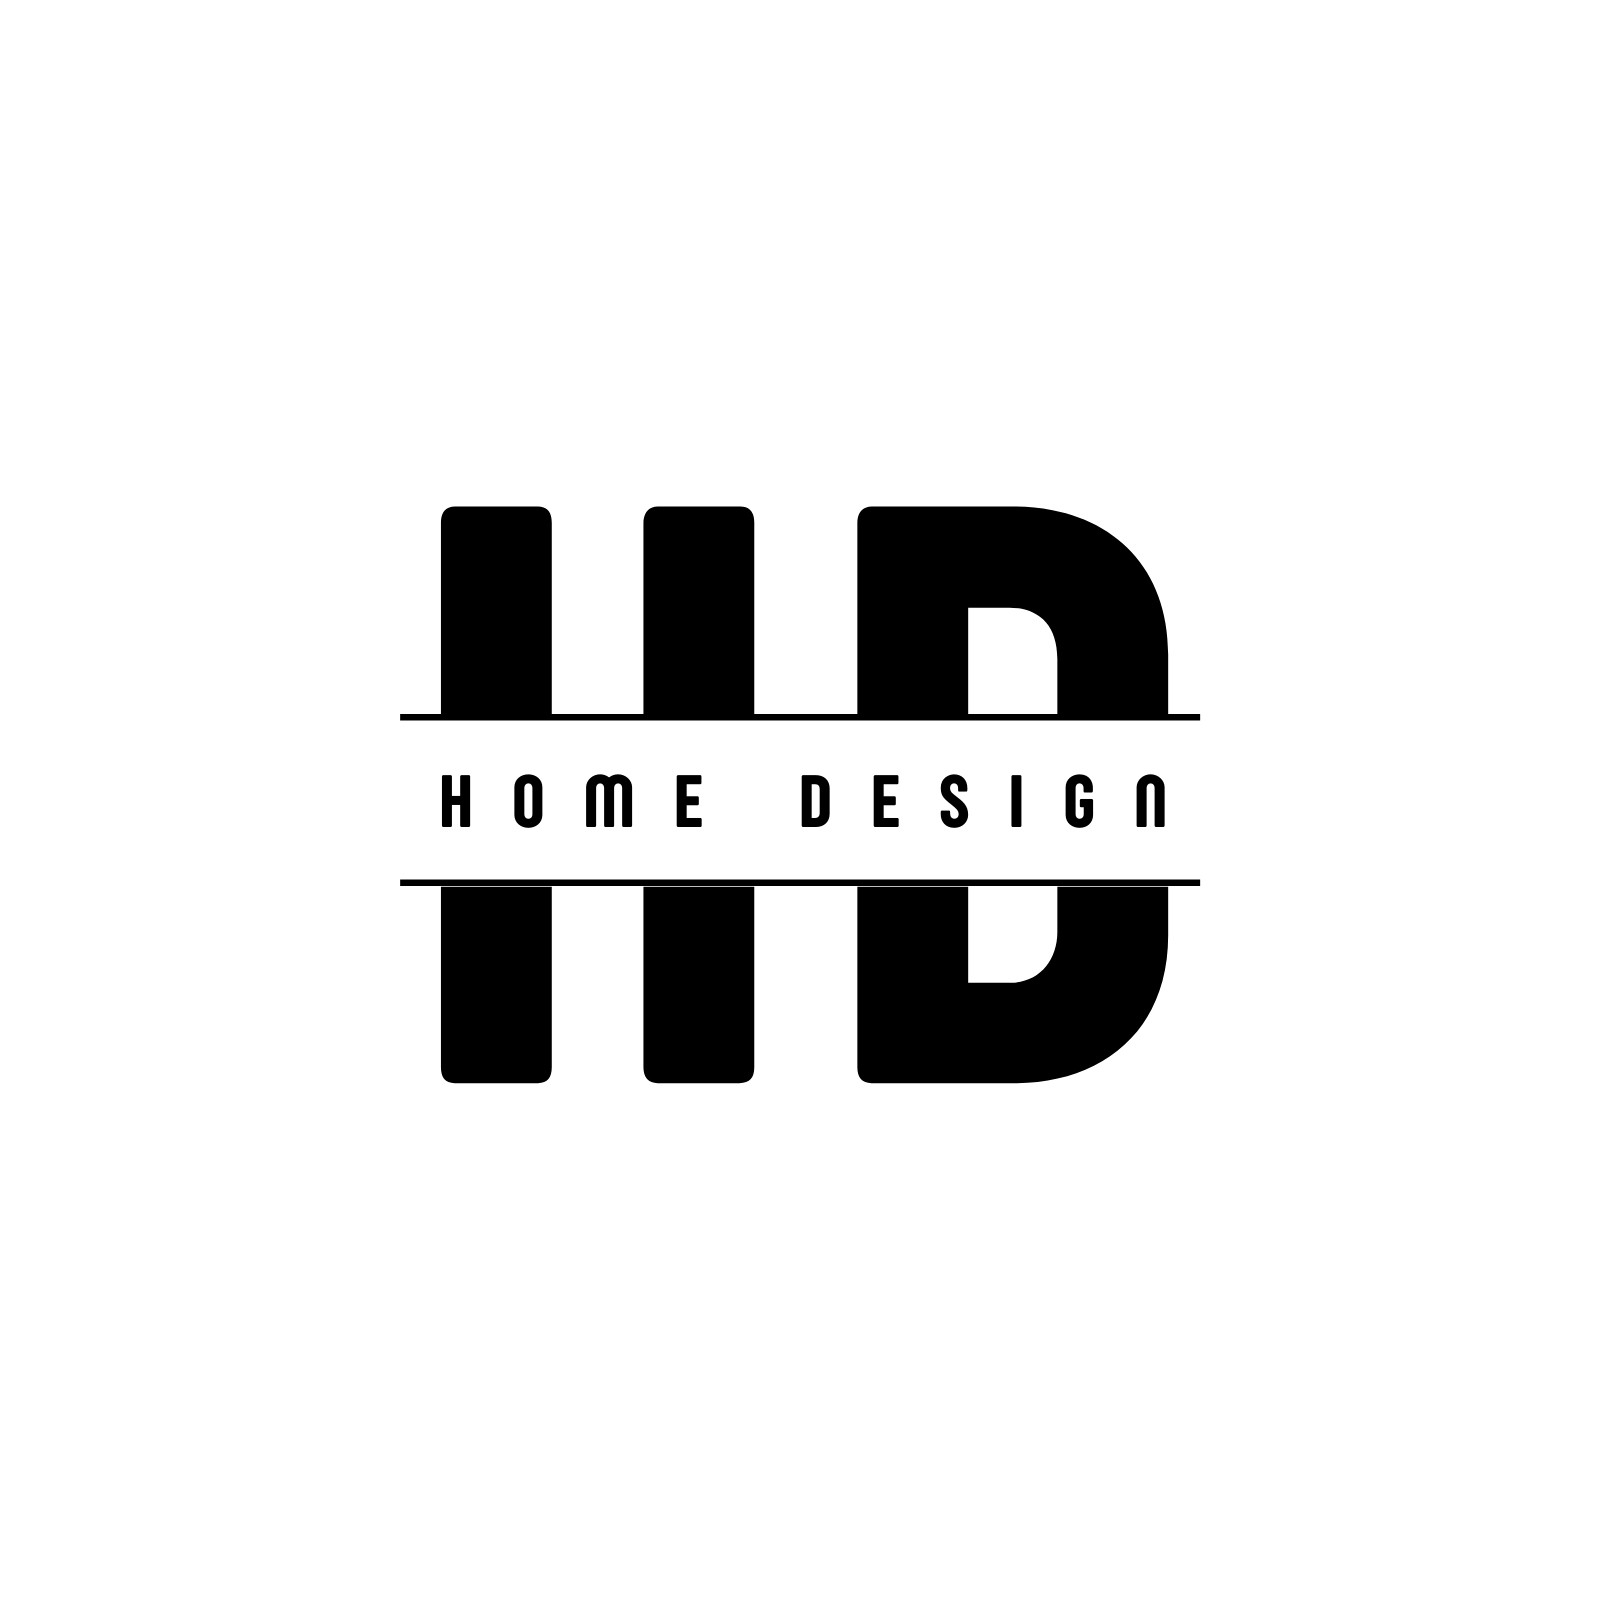 design a simple logo